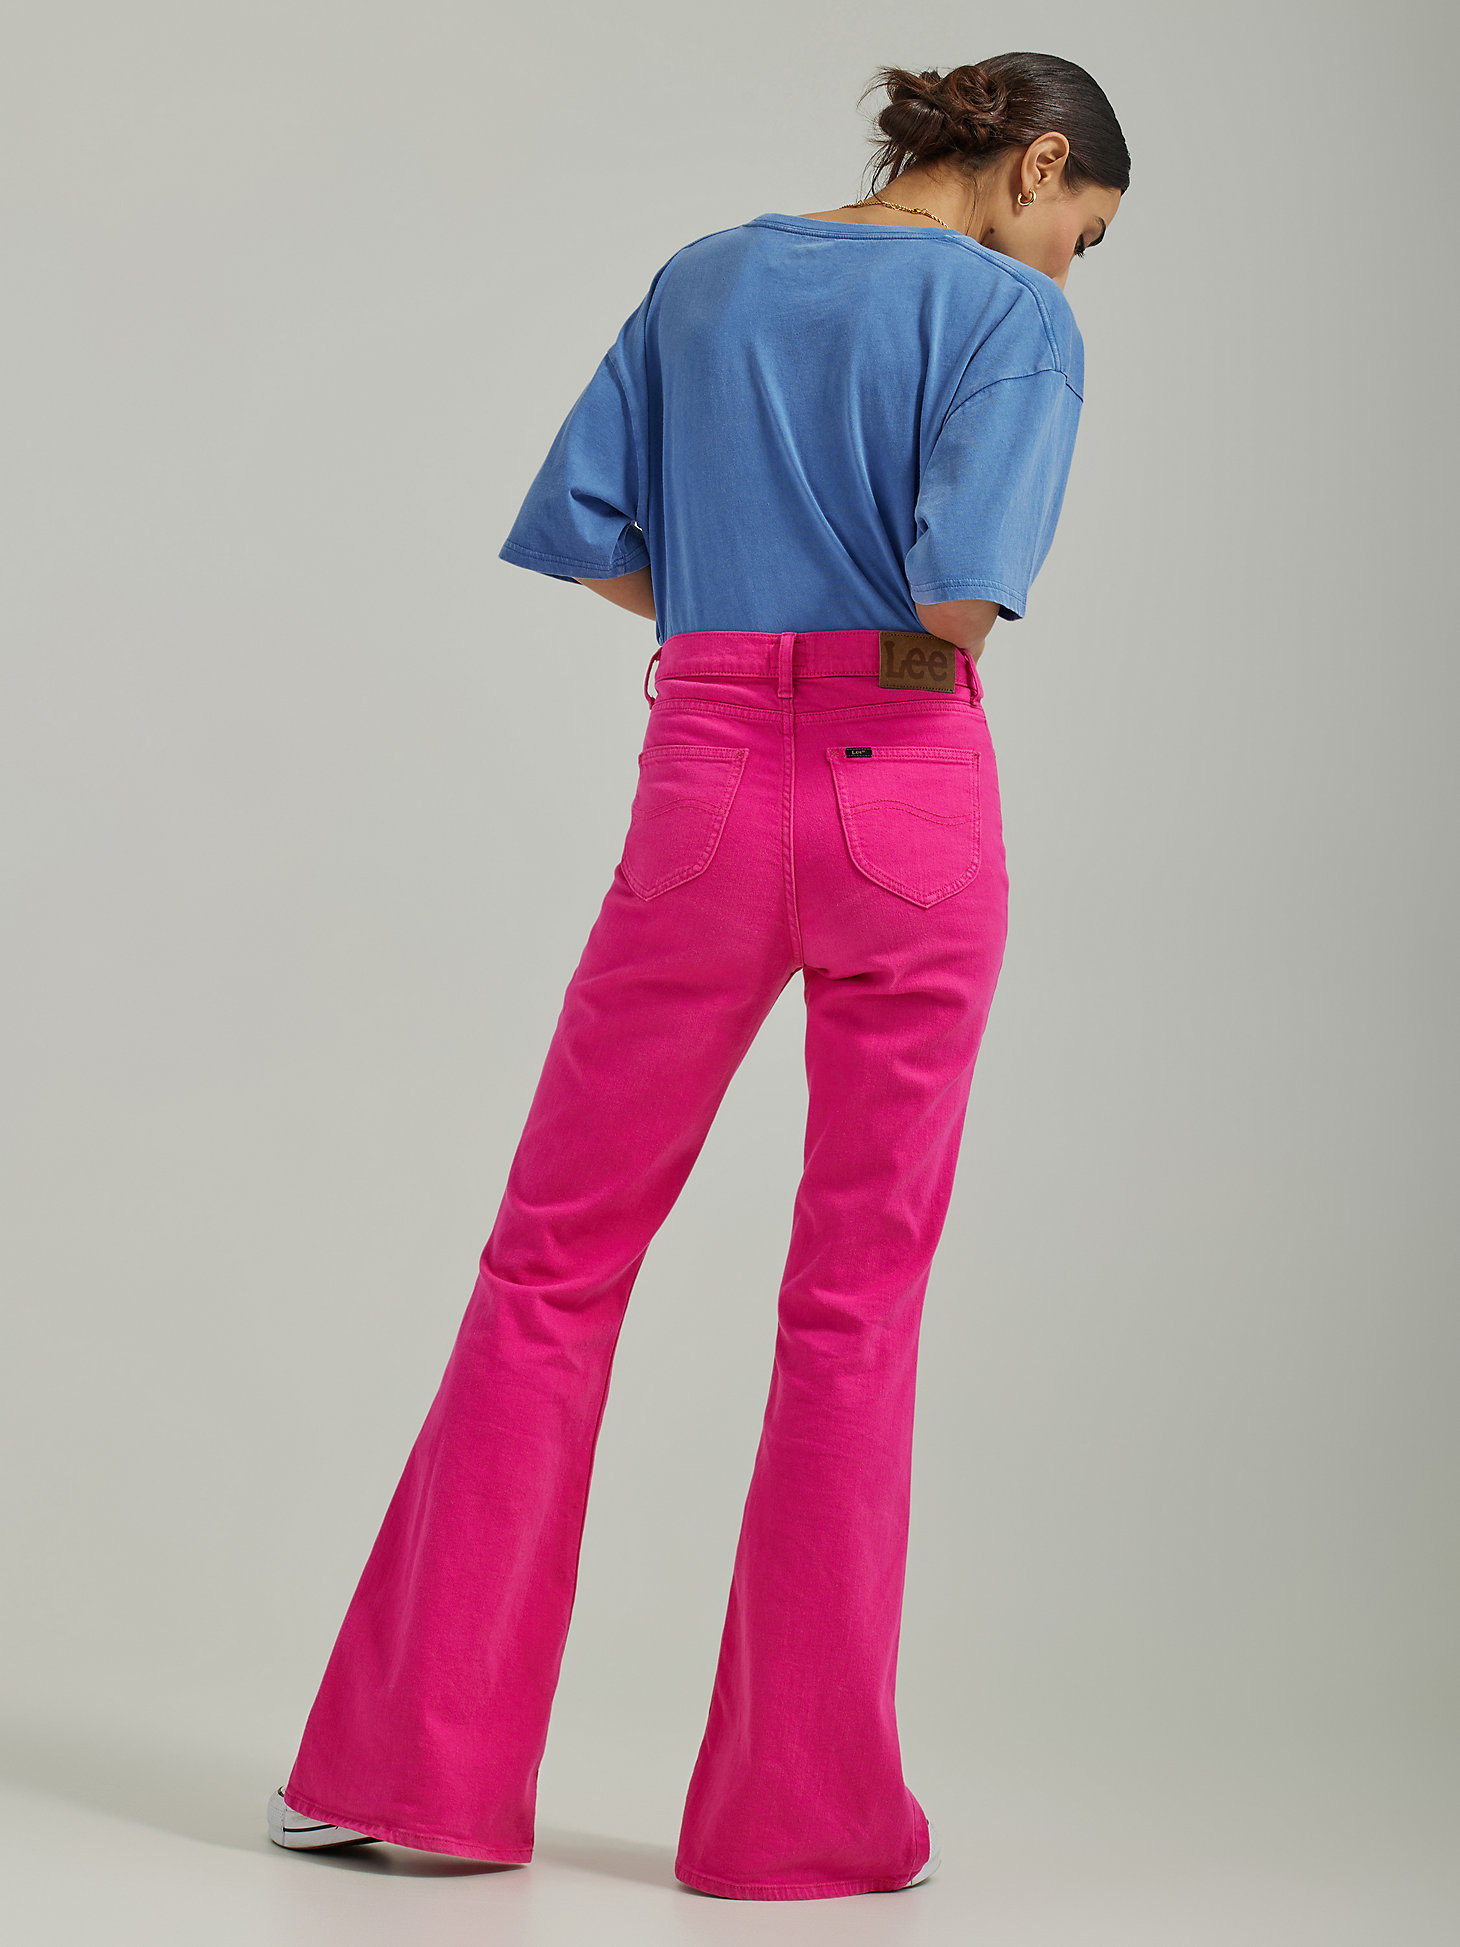 Women's Vintage Modern High Rise Flare Jean in Roxie Pink alternative view 1